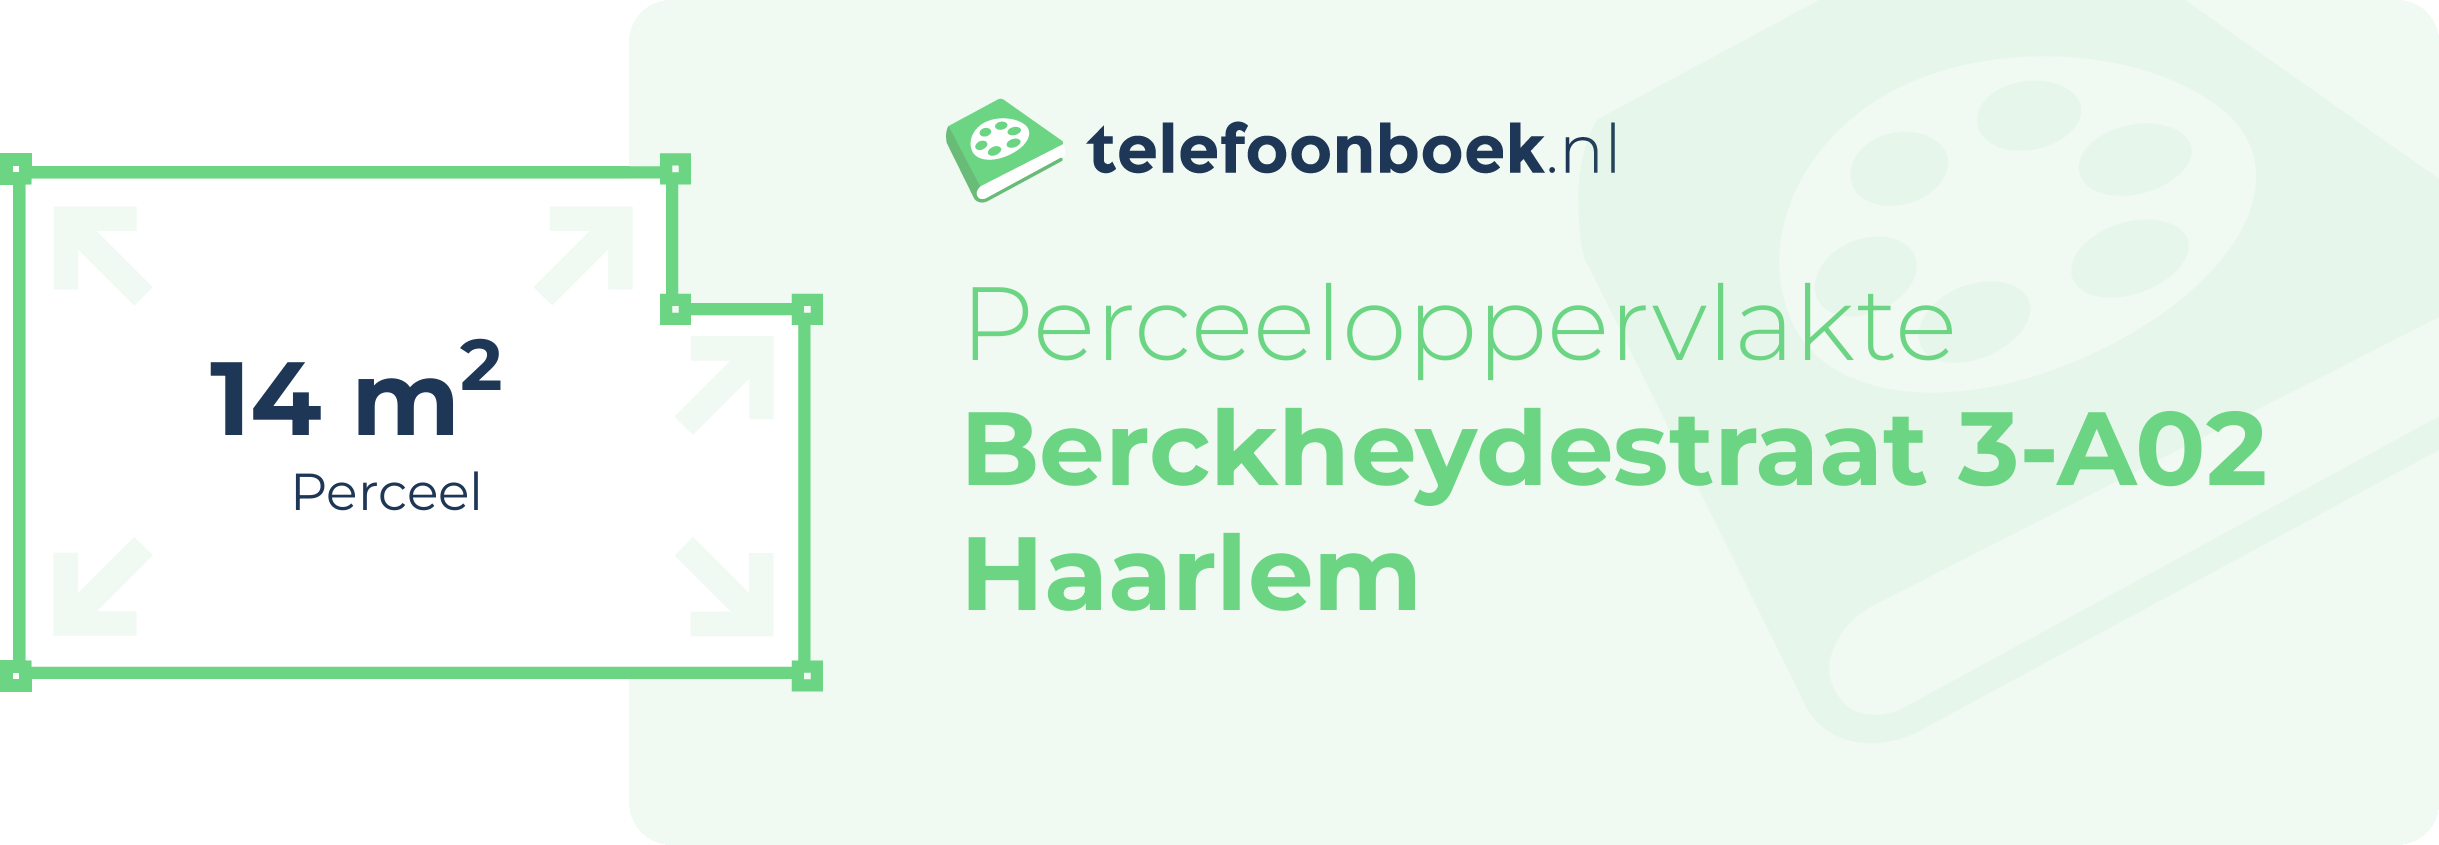 Perceeloppervlakte Berckheydestraat 3-A02 Haarlem